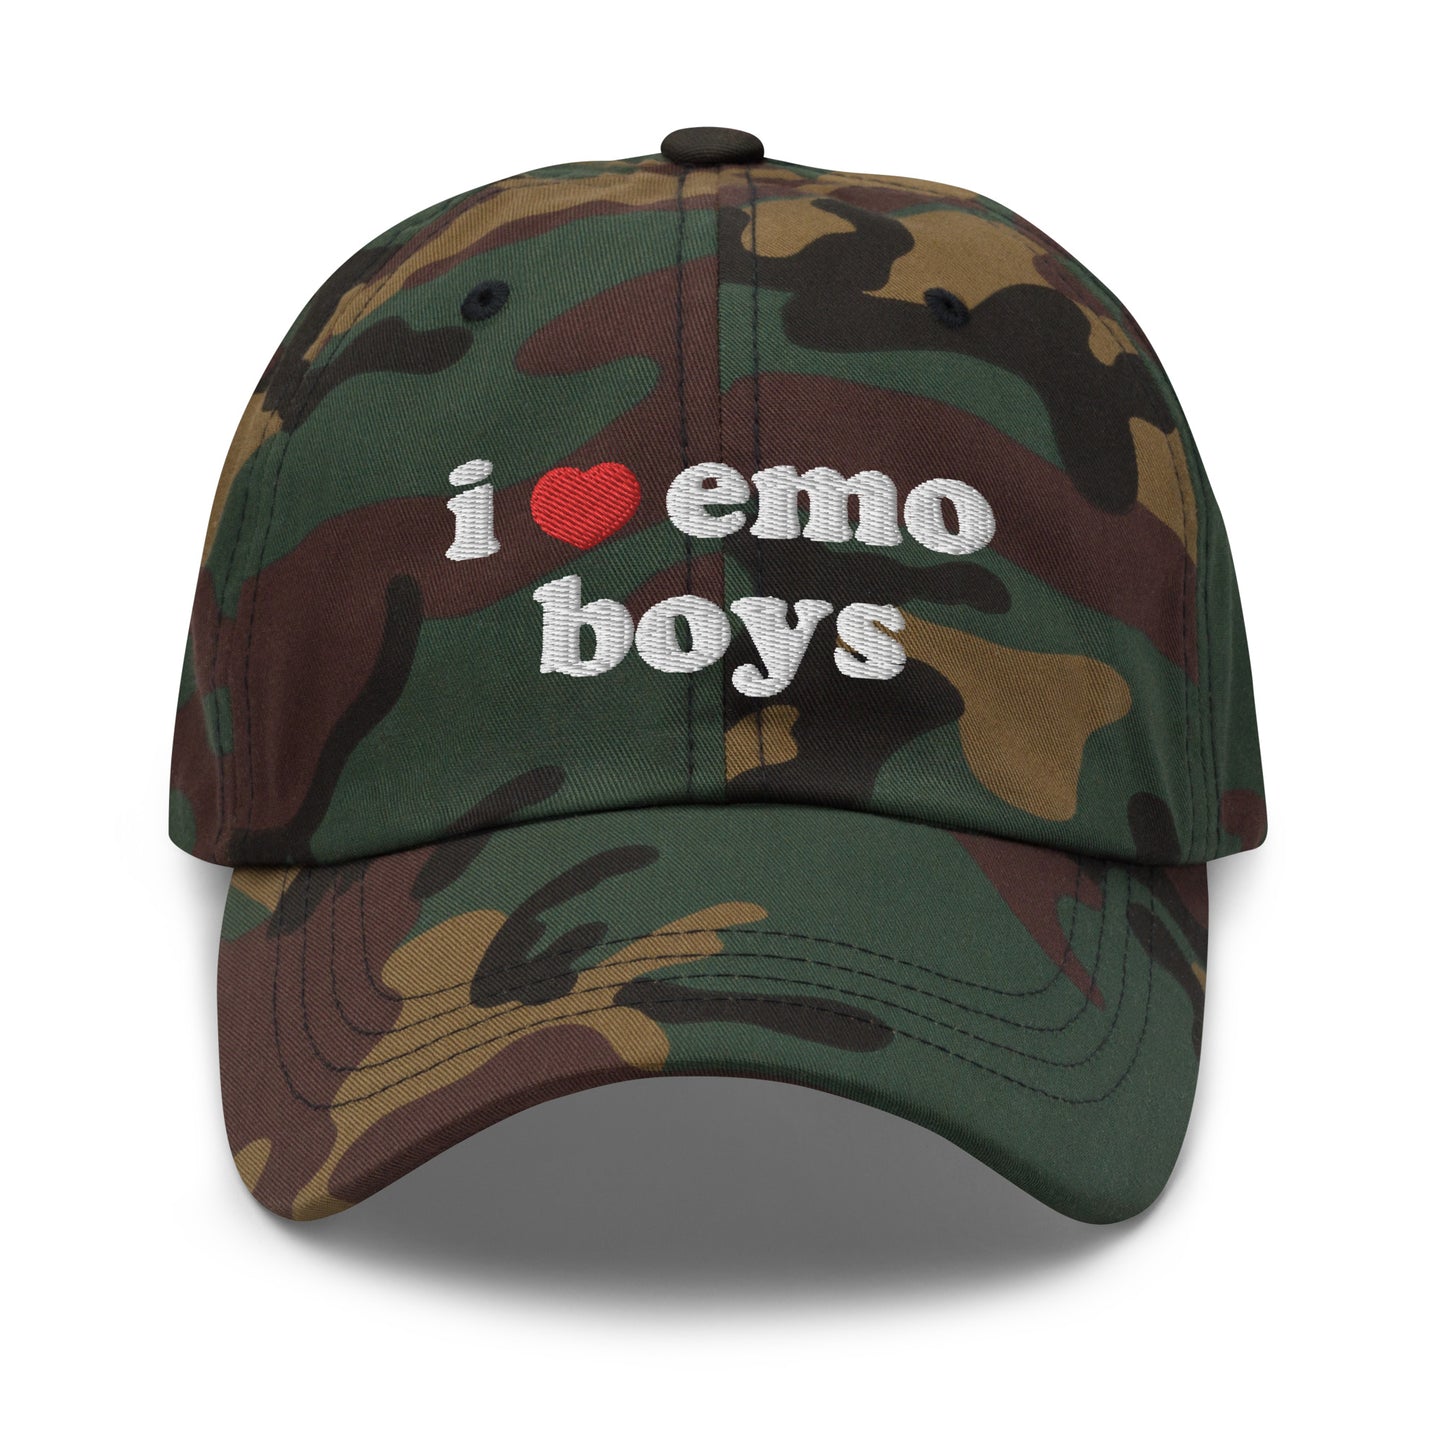 I Heart Emo Boys hat